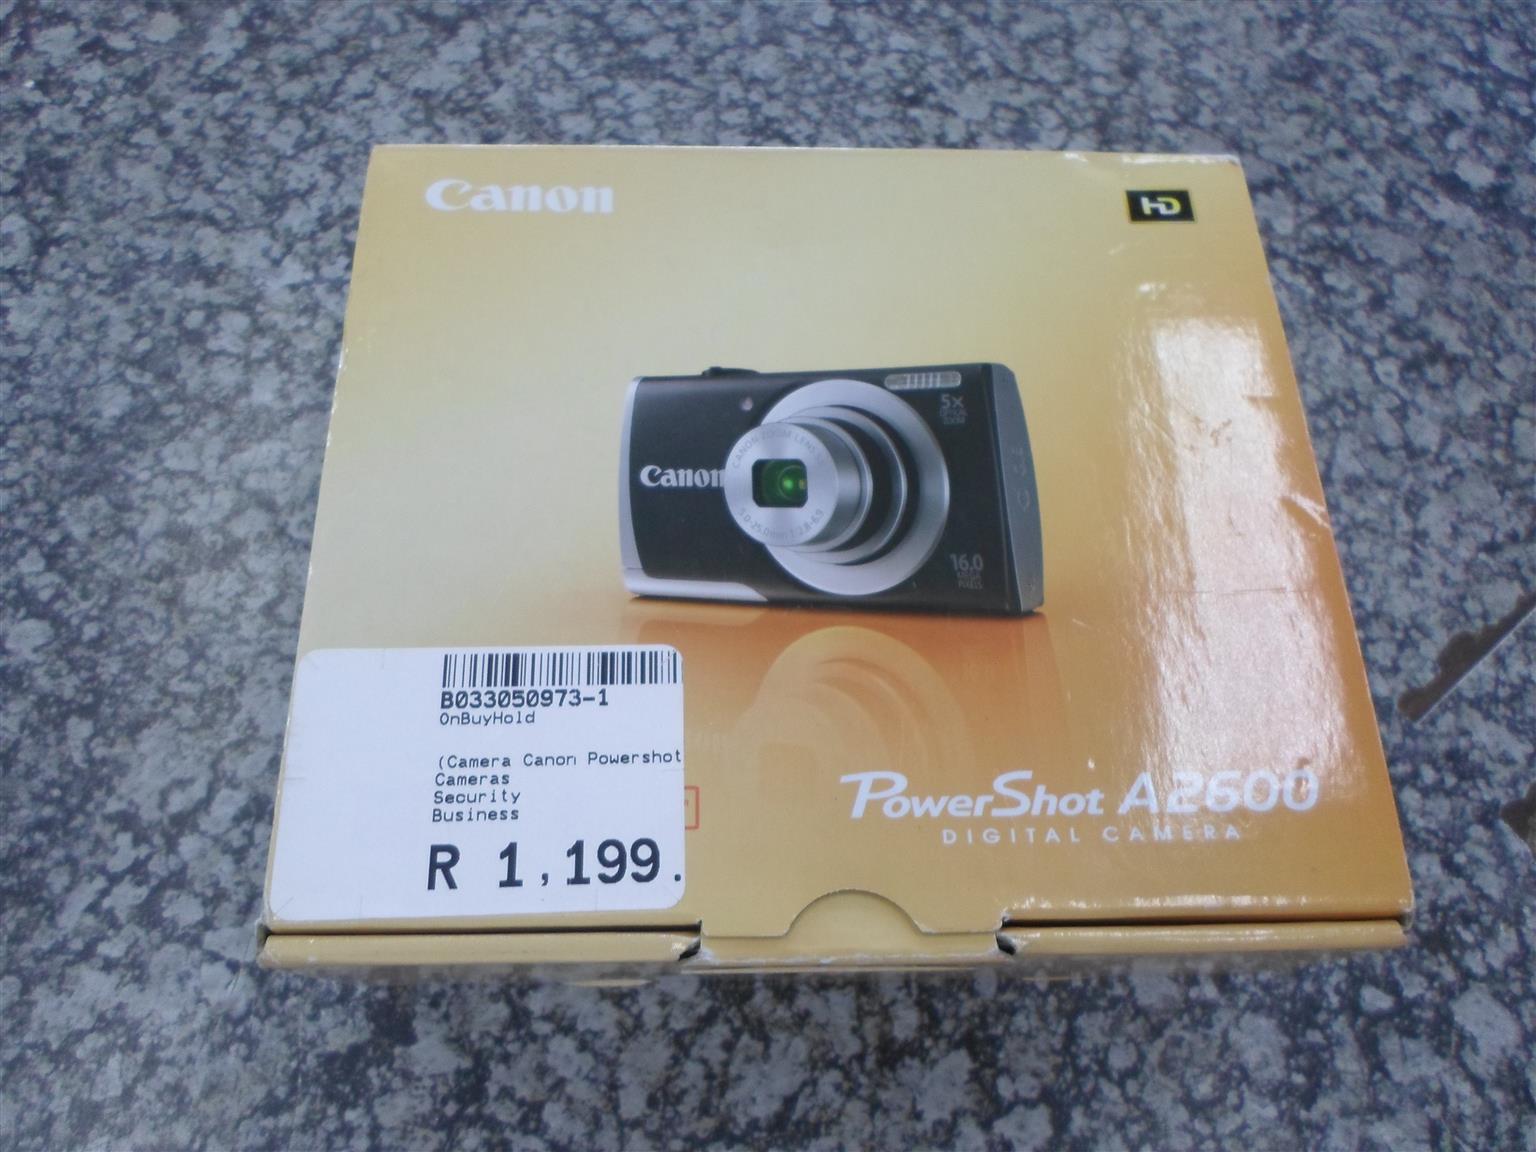 Canon Powershot A2600 Digital Camera - B033050973-1